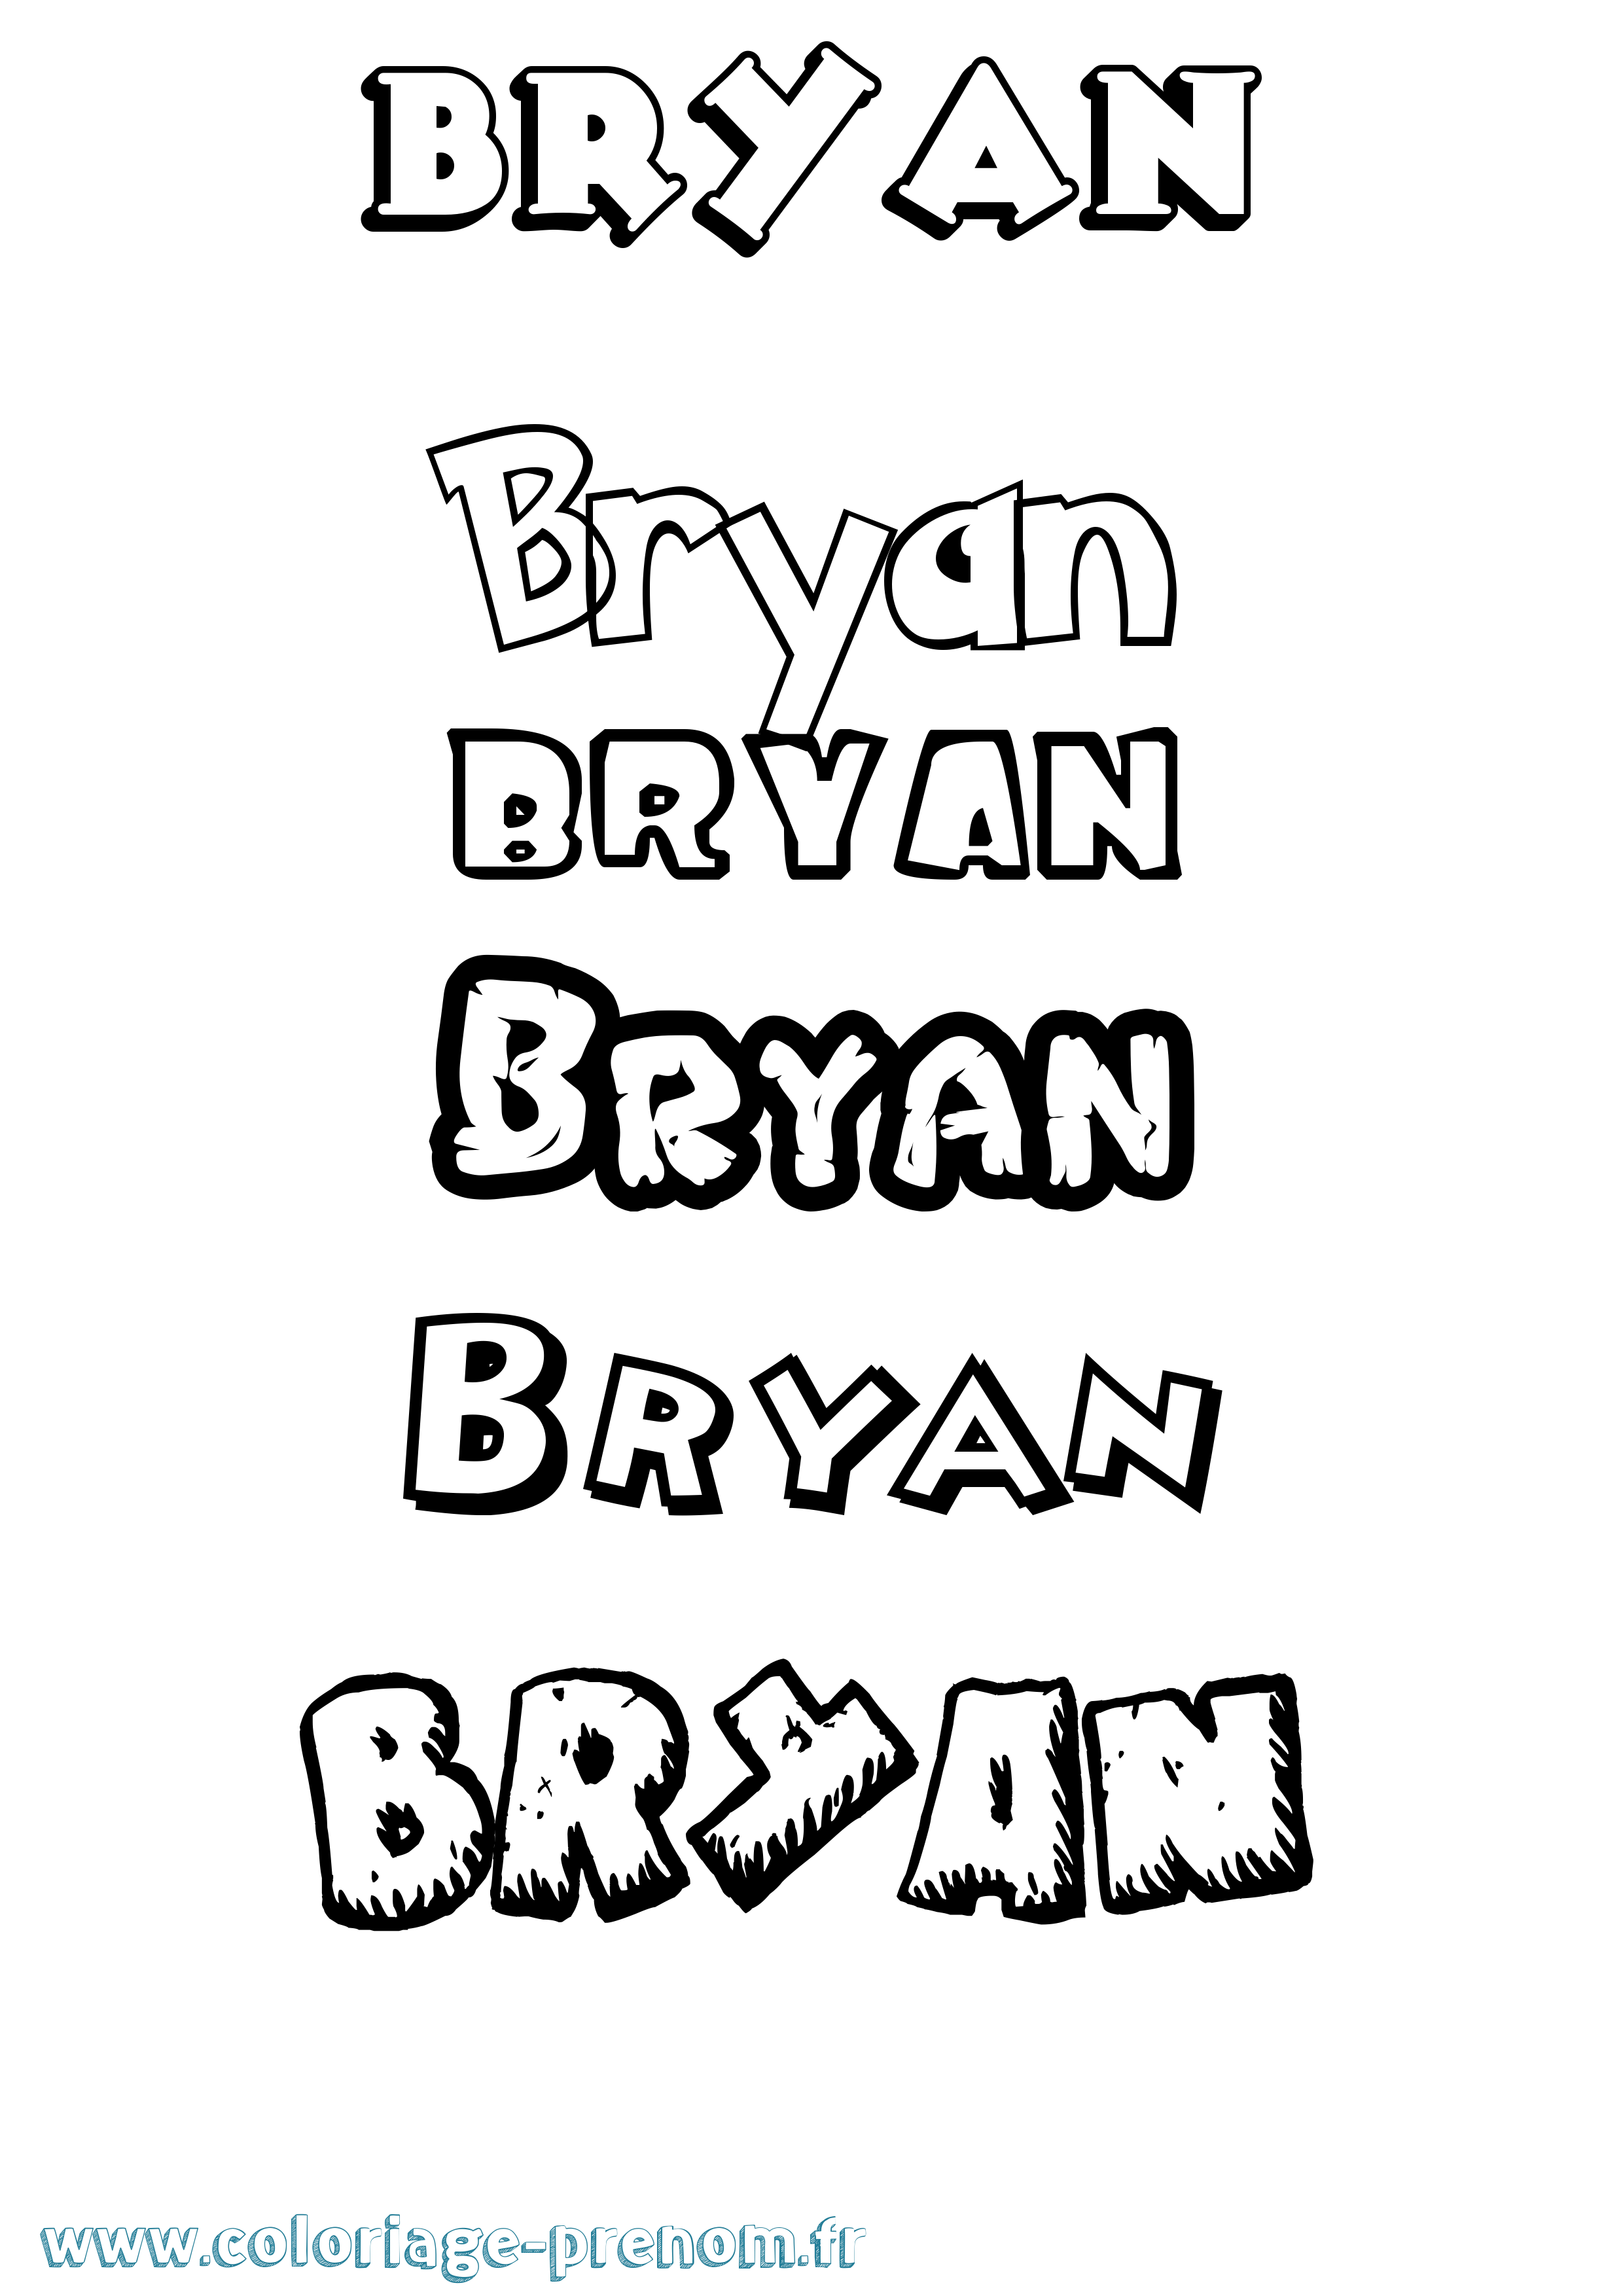 Coloriage prénom Bryan